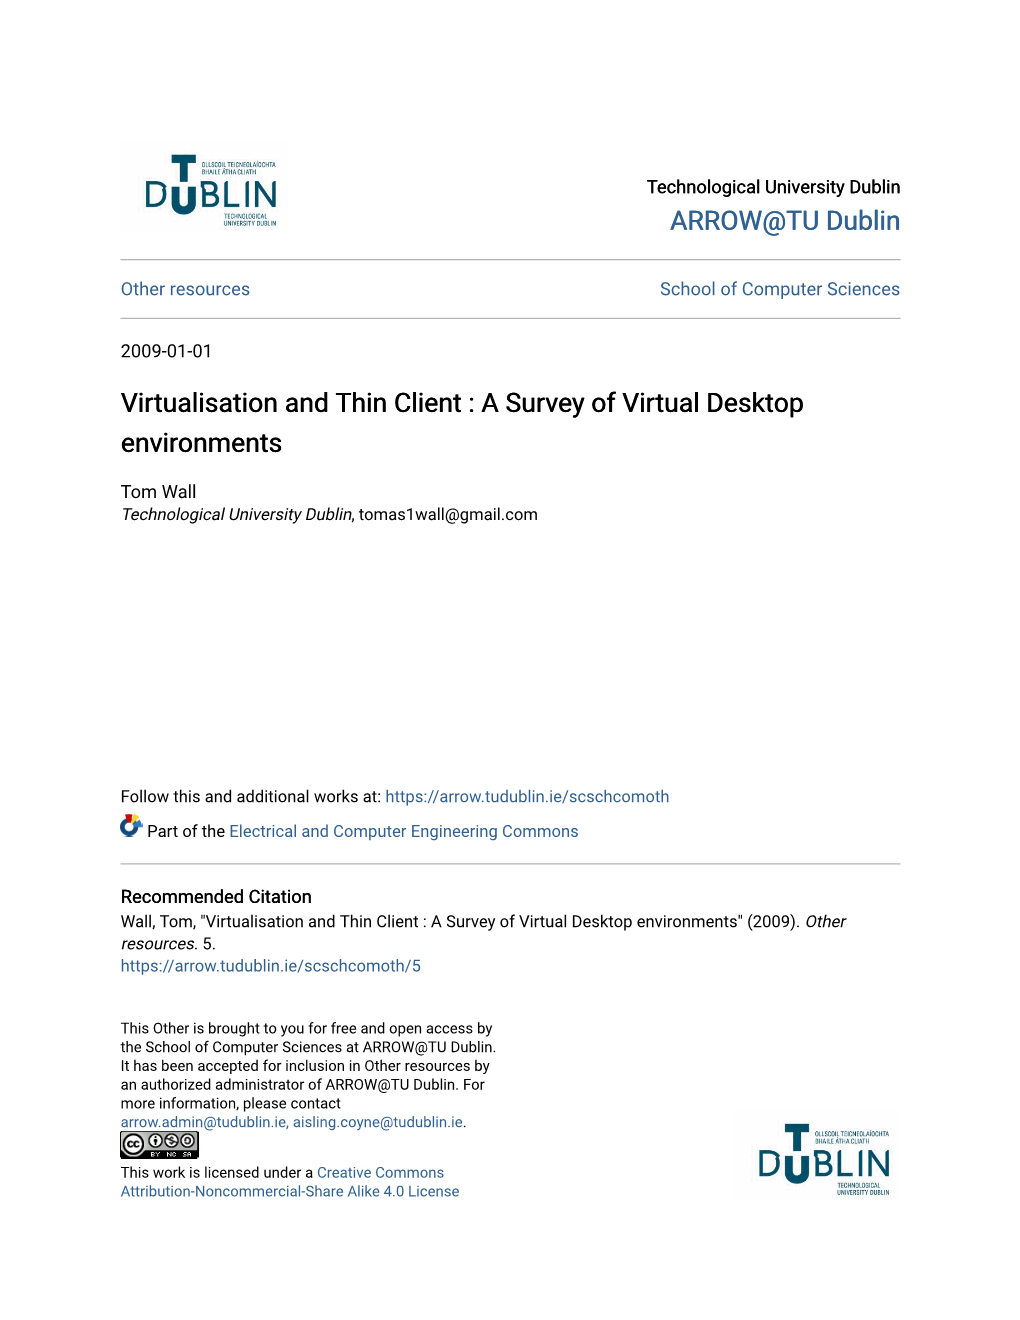 Virtualisation and Thin Client : a Survey of Virtual Desktop Environments